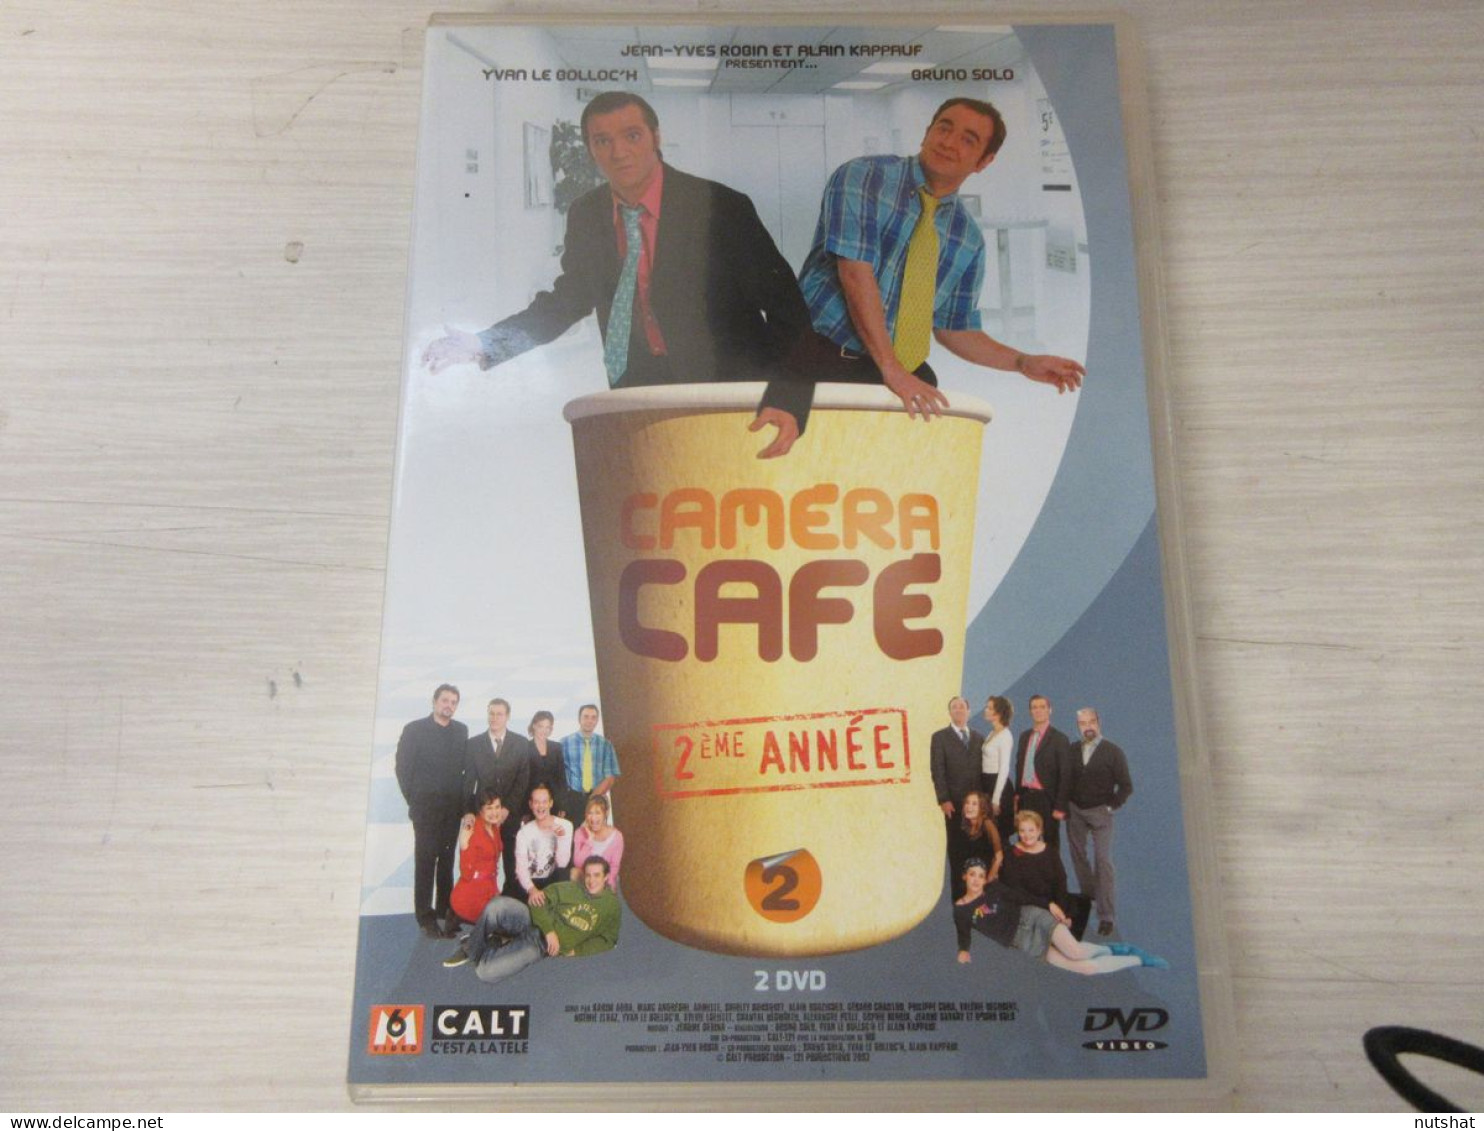 DVD SERIE TV CAMERA CAFE 2eme ANNEE Bruno SOLO Yvan Le BOLLOC'H 2xDVD 2002  - TV-Reeksen En Programma's